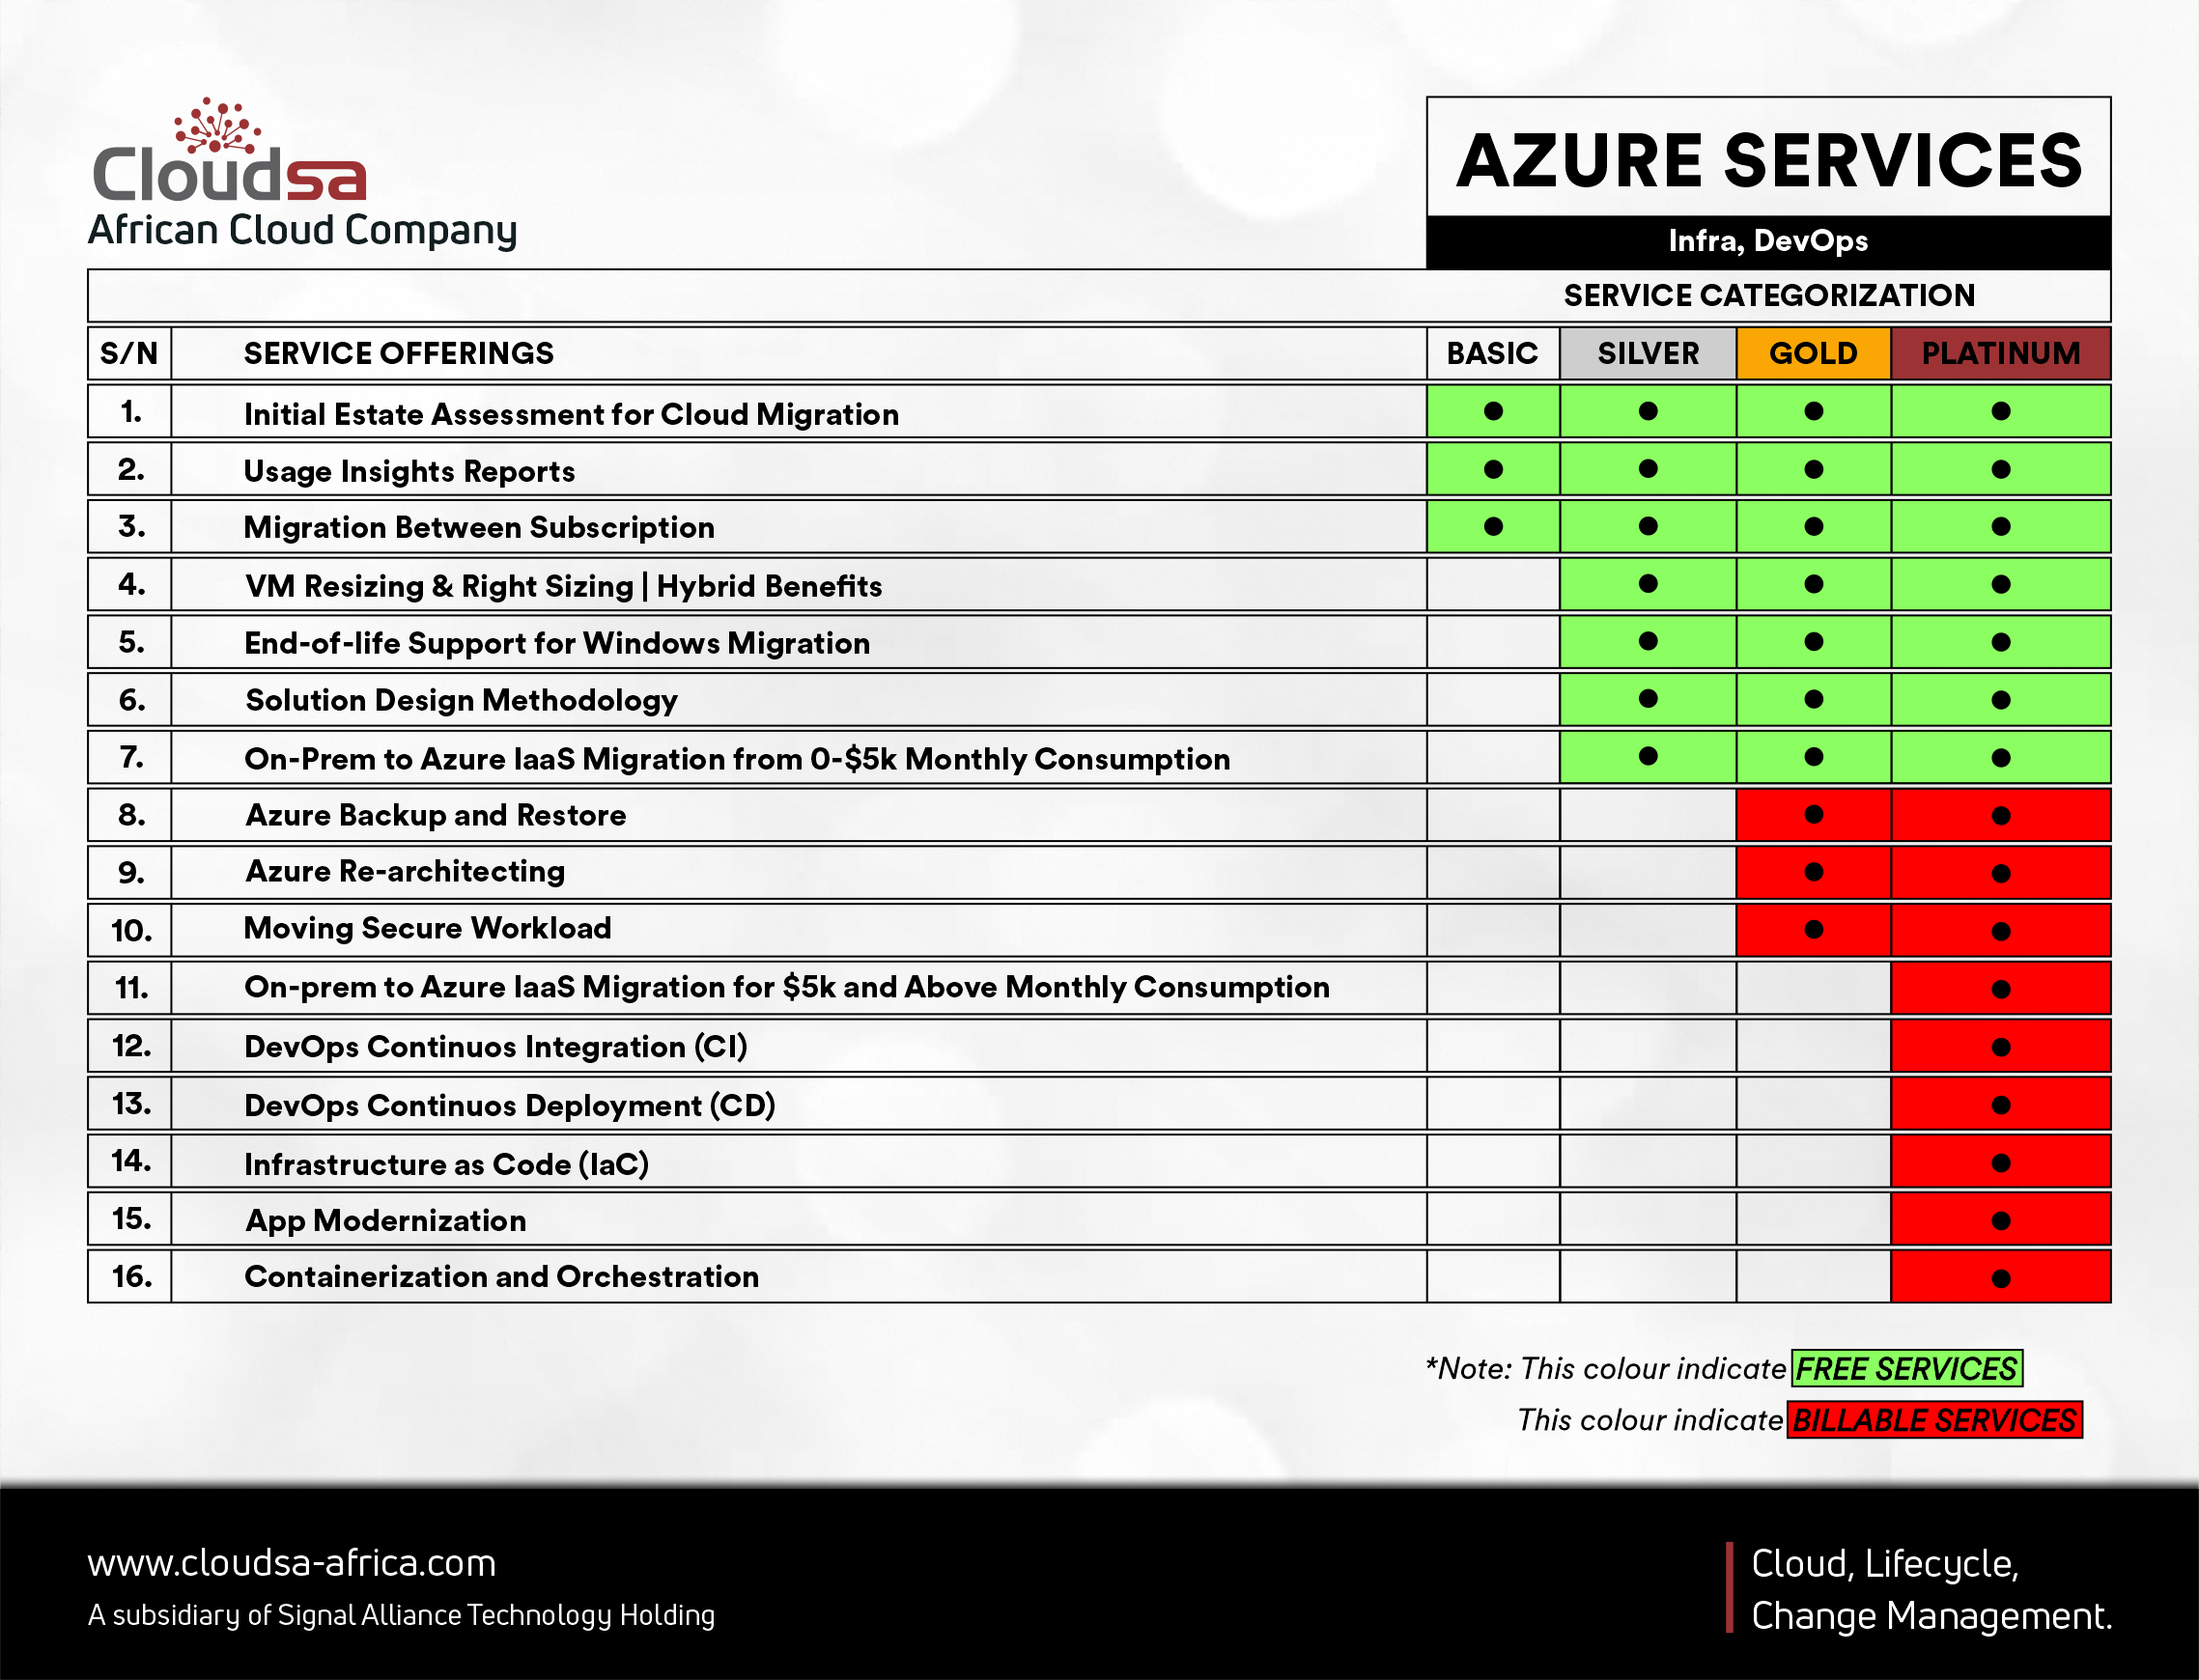 Cloudsa Billable service on Azure